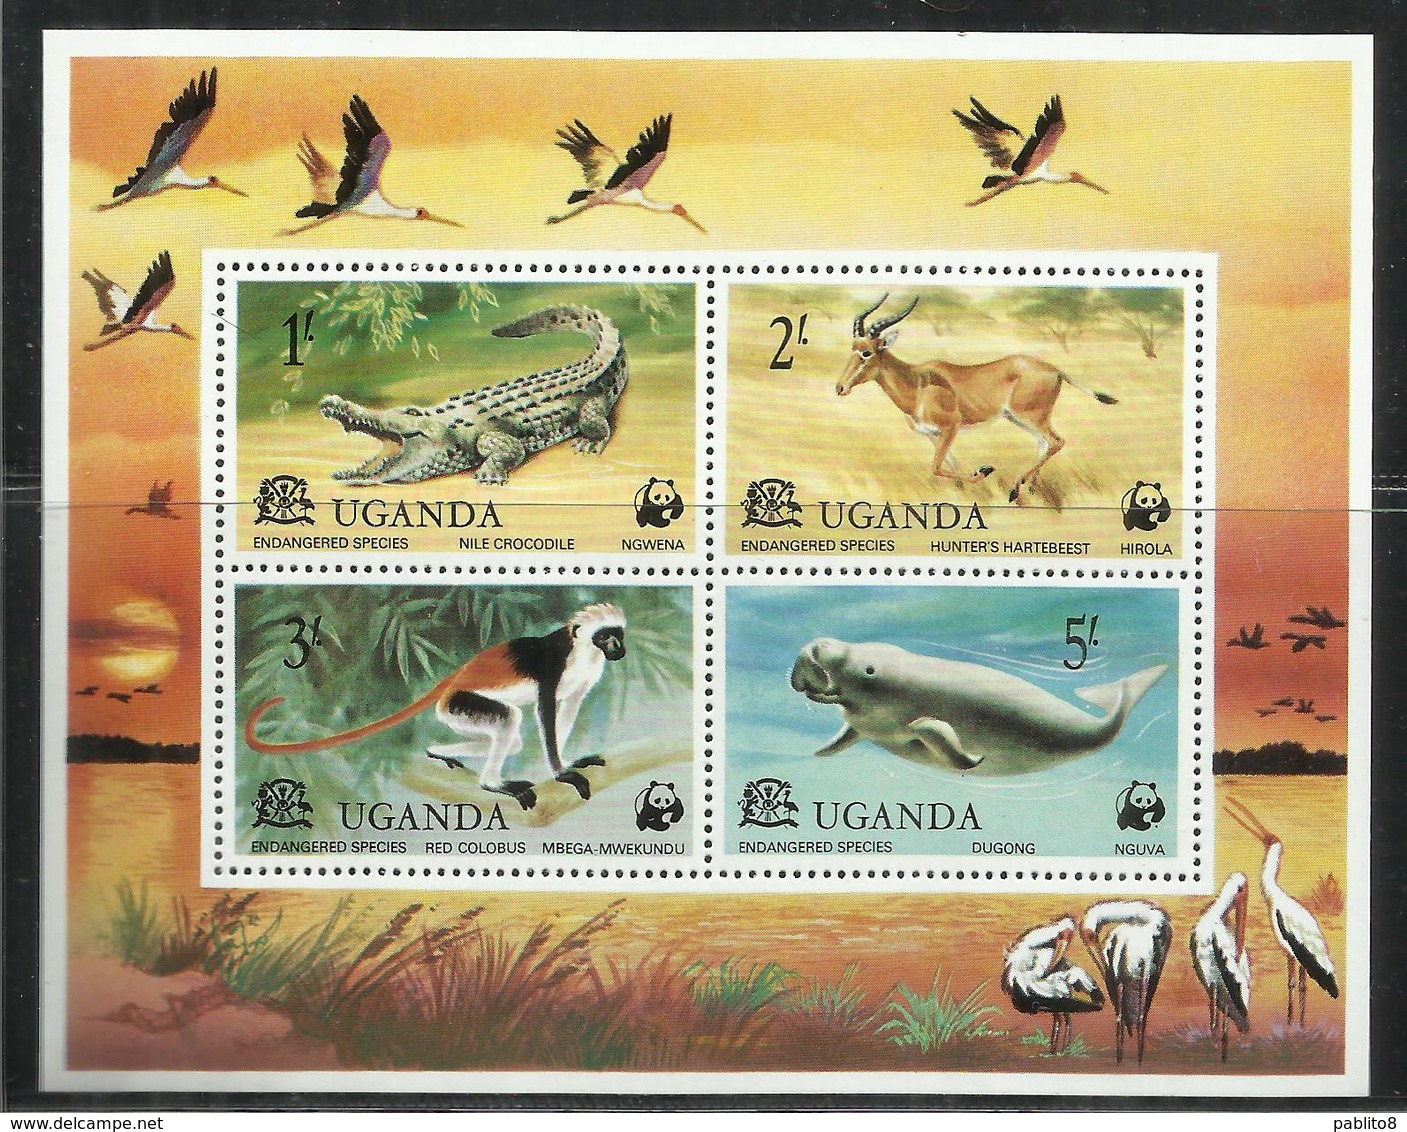 UGANDA 1977 FAUNA WWF ANIMALS WILDLIFE NATURE ANIMALI NATURA BLOCK SHEET BLOCCO FOGLIETTO BLOC FEUILLET MNH - Uganda (1962-...)